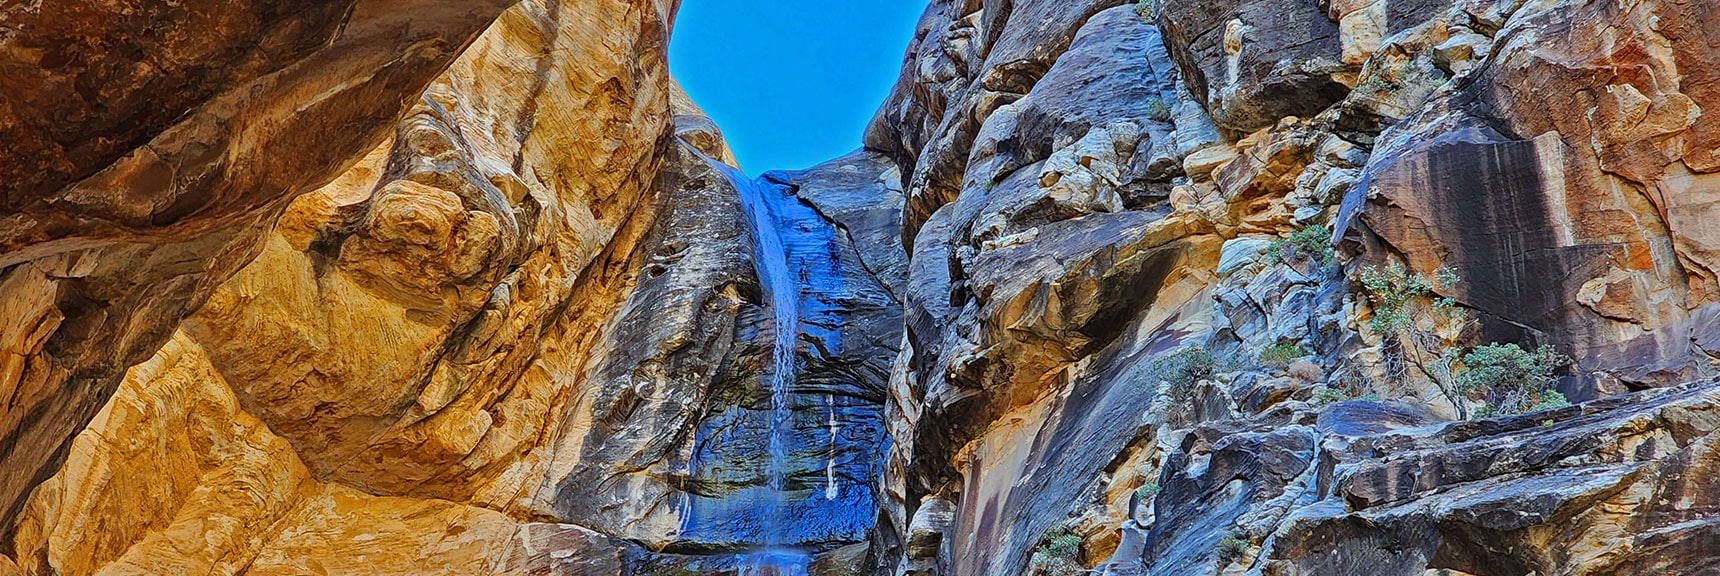 Ice Box Canyon | Red Rock Canyon NCA, Nevada | Las Vegas Area Trails | David Smith